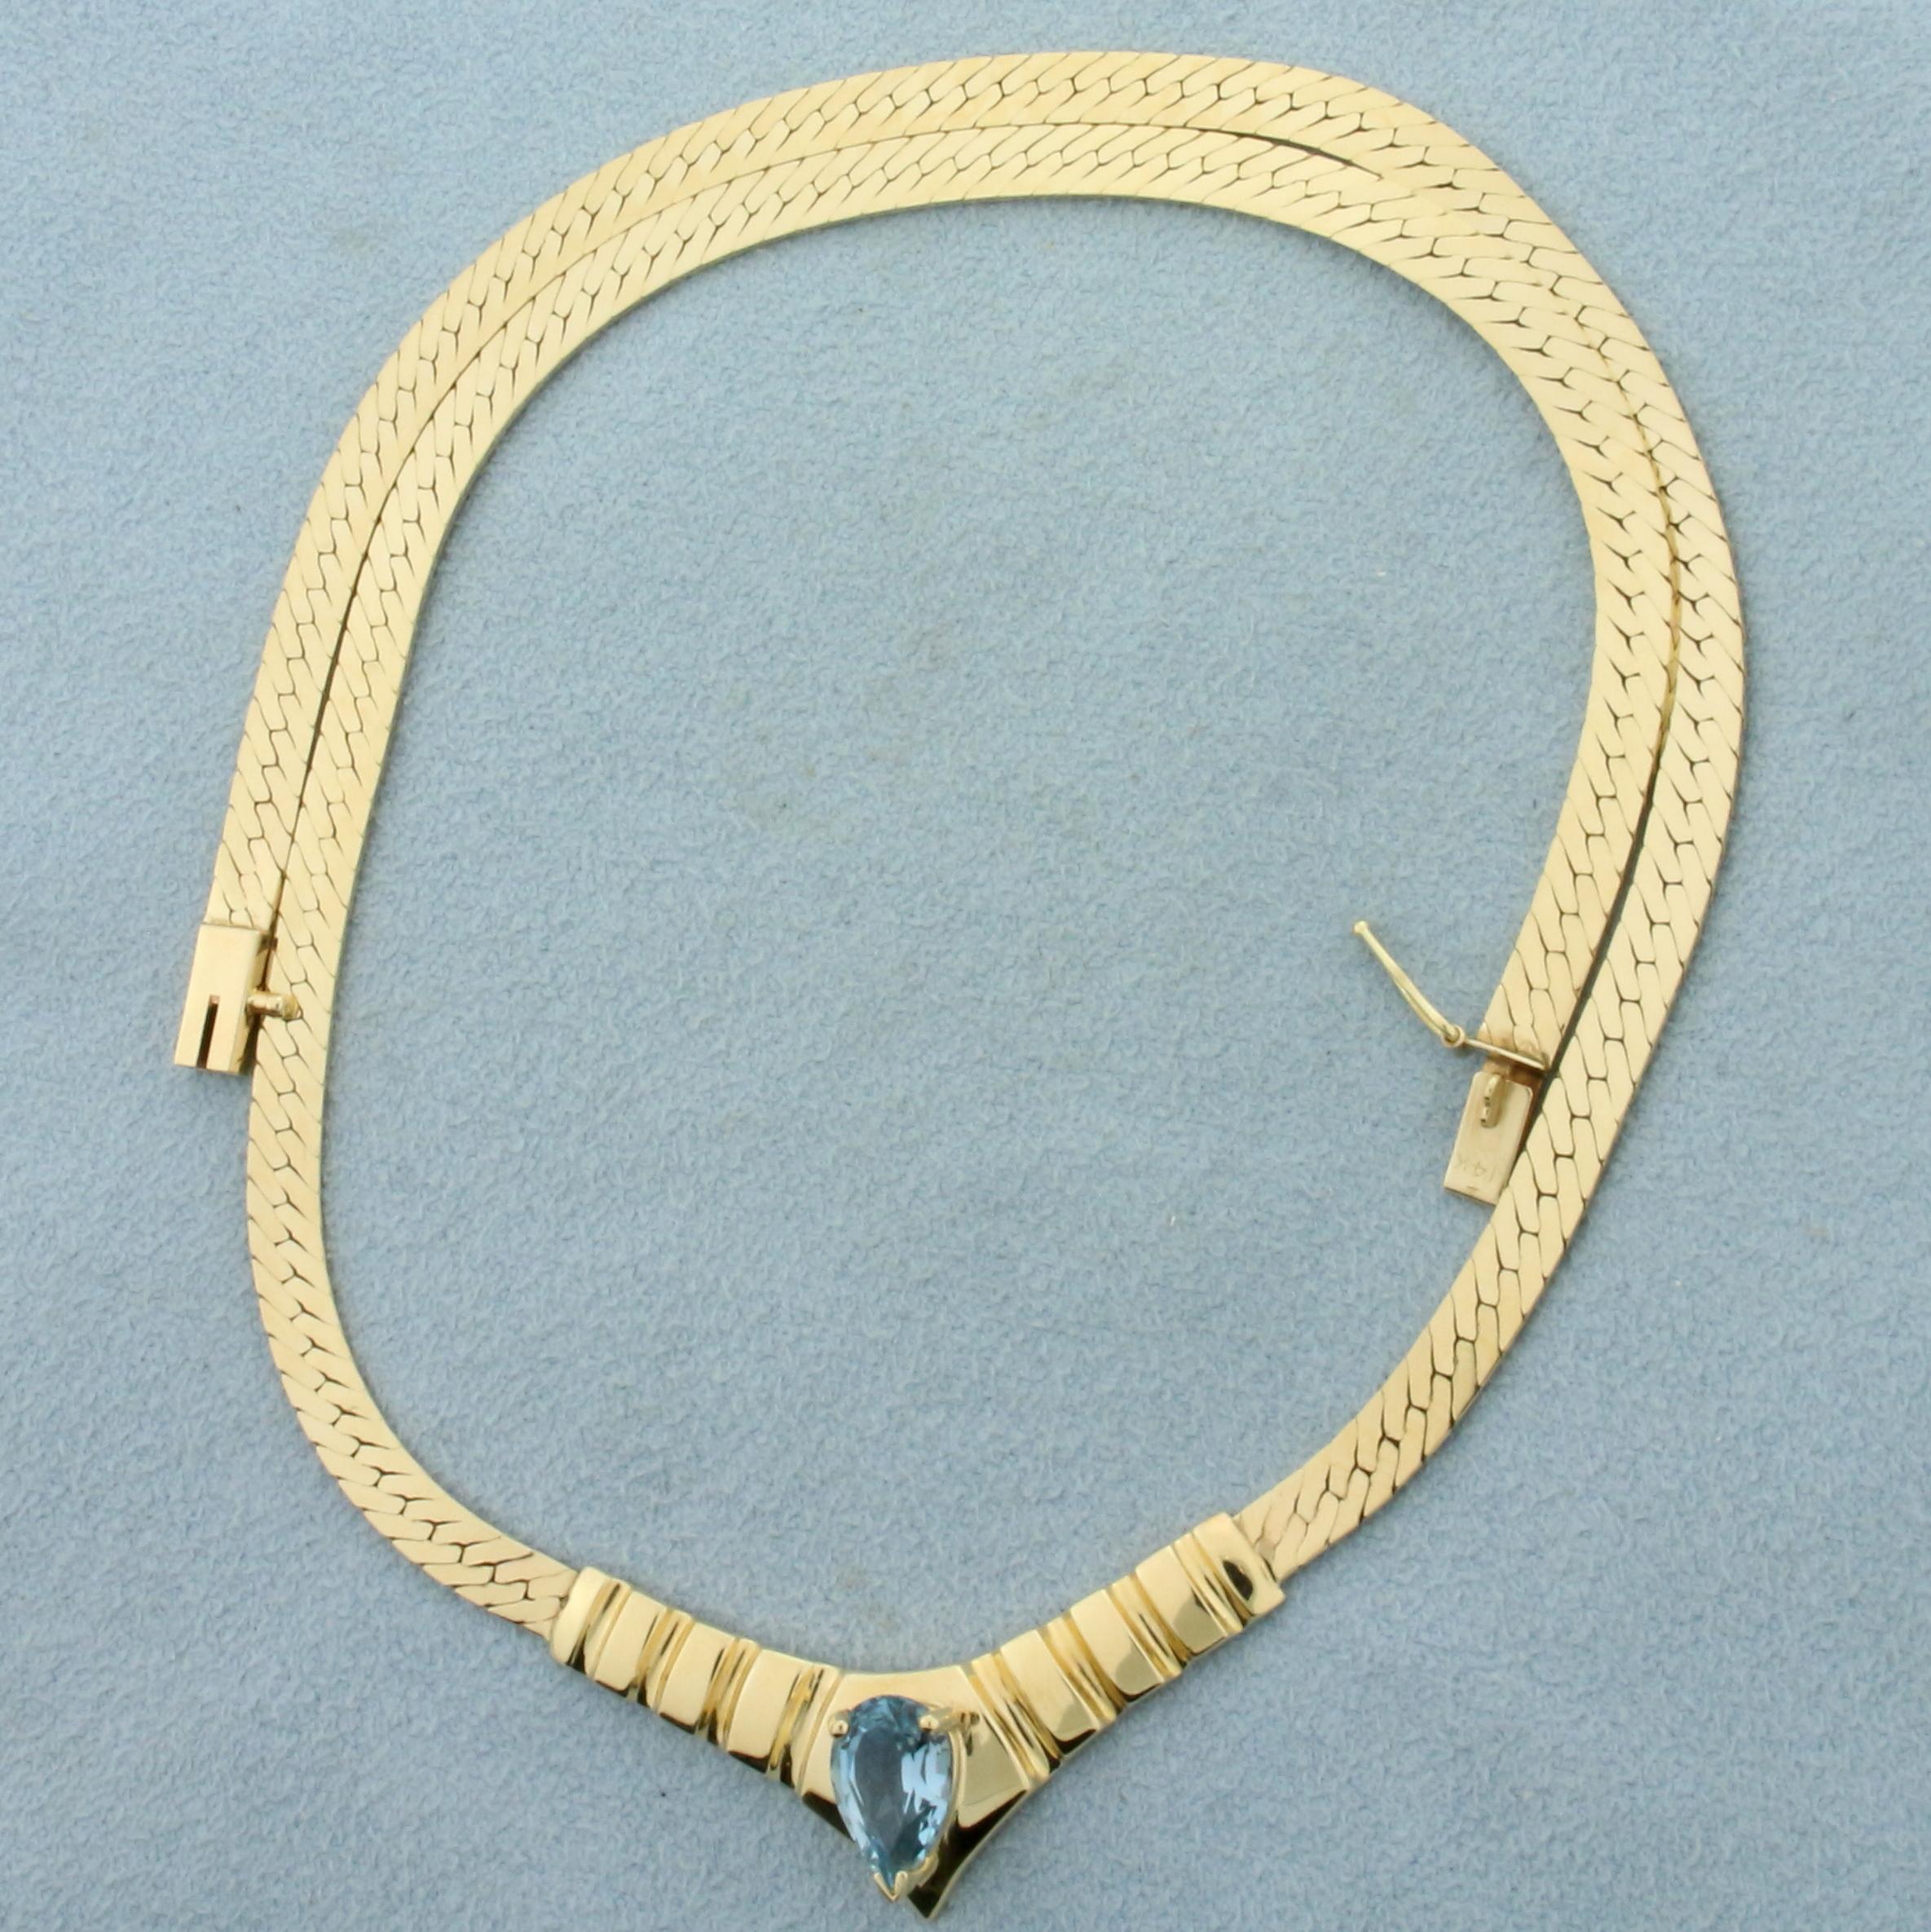 Light Blue Sapphire Herringbone Necklace In 14k Yellow Gold